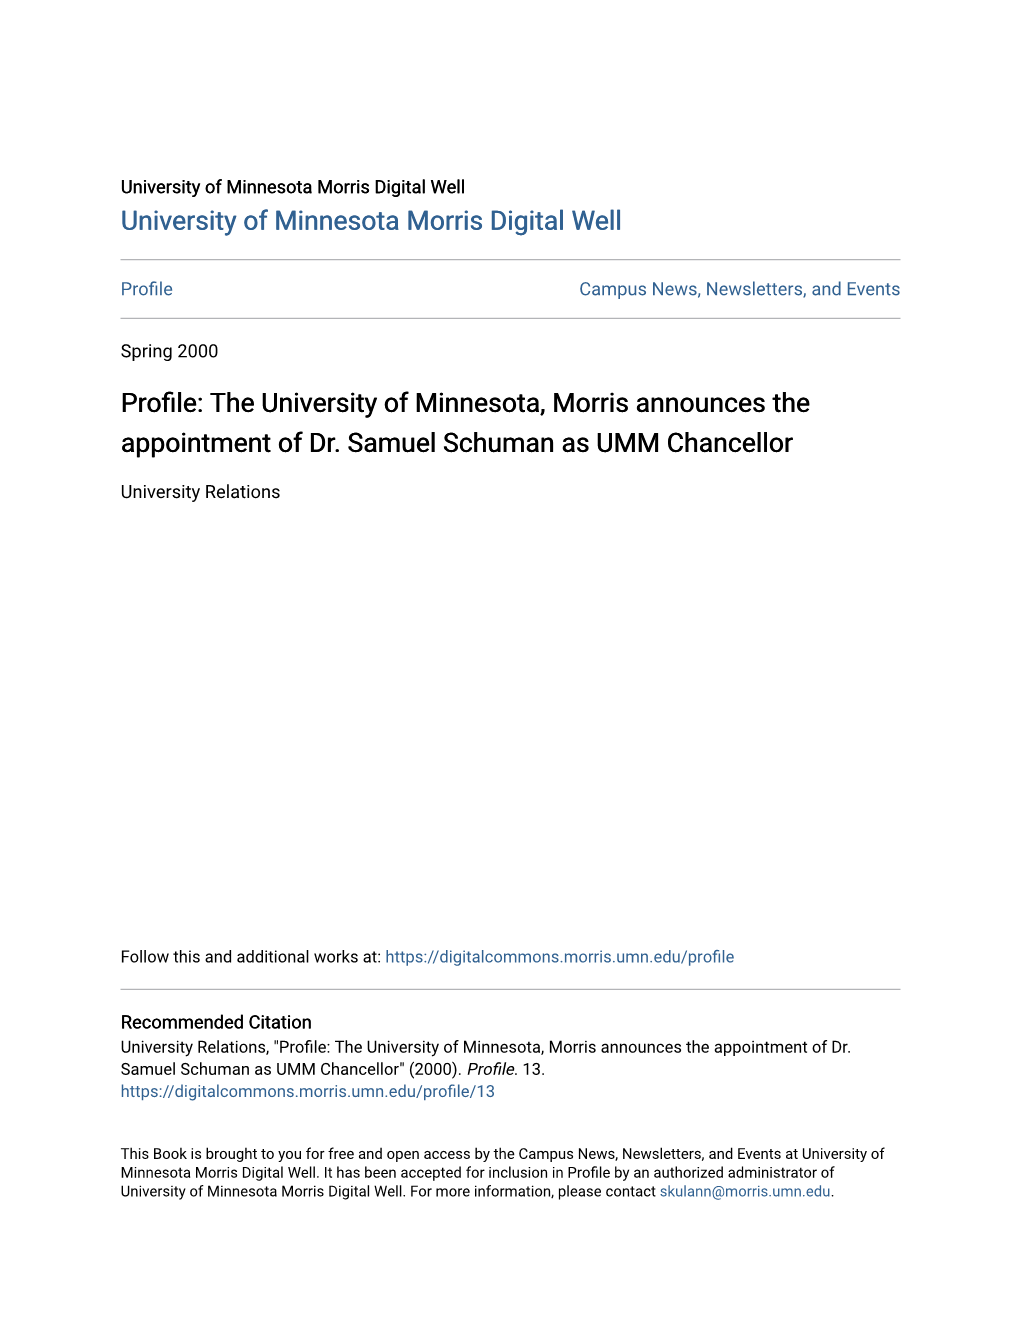 Profile: the University of Minnesota, Morris Announces the Appointment of Dr. Samuel Schuman As UMM Chancellor